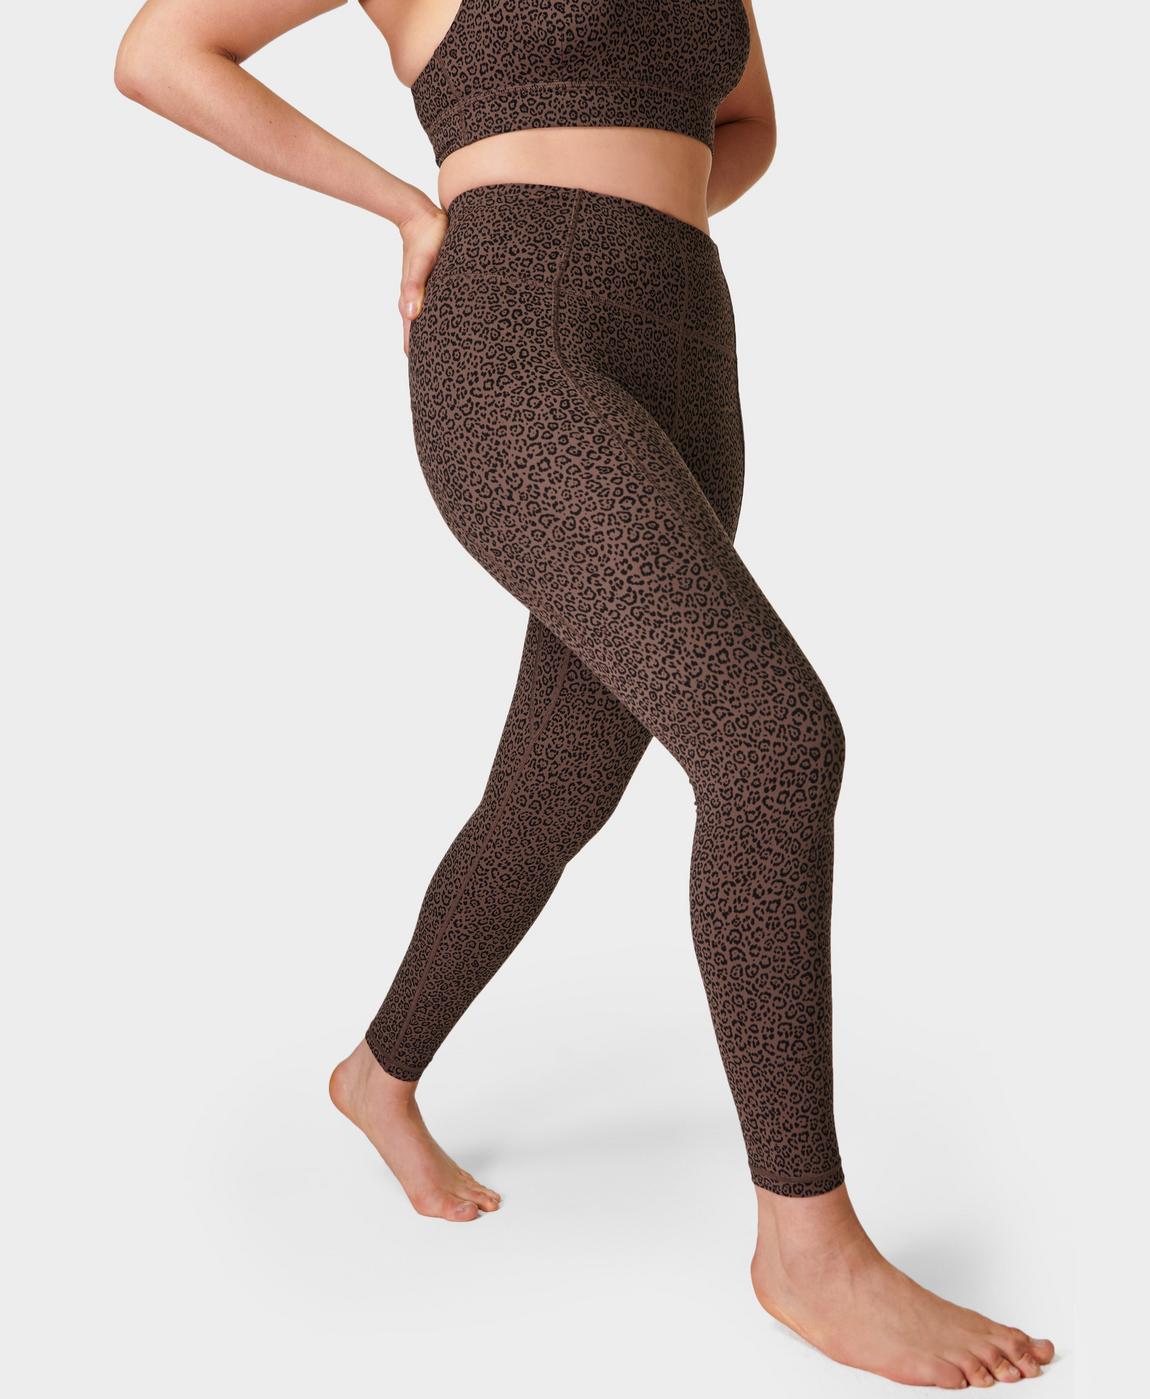 Super Soft Yoga Leggings - Brown Leopard Markings Print